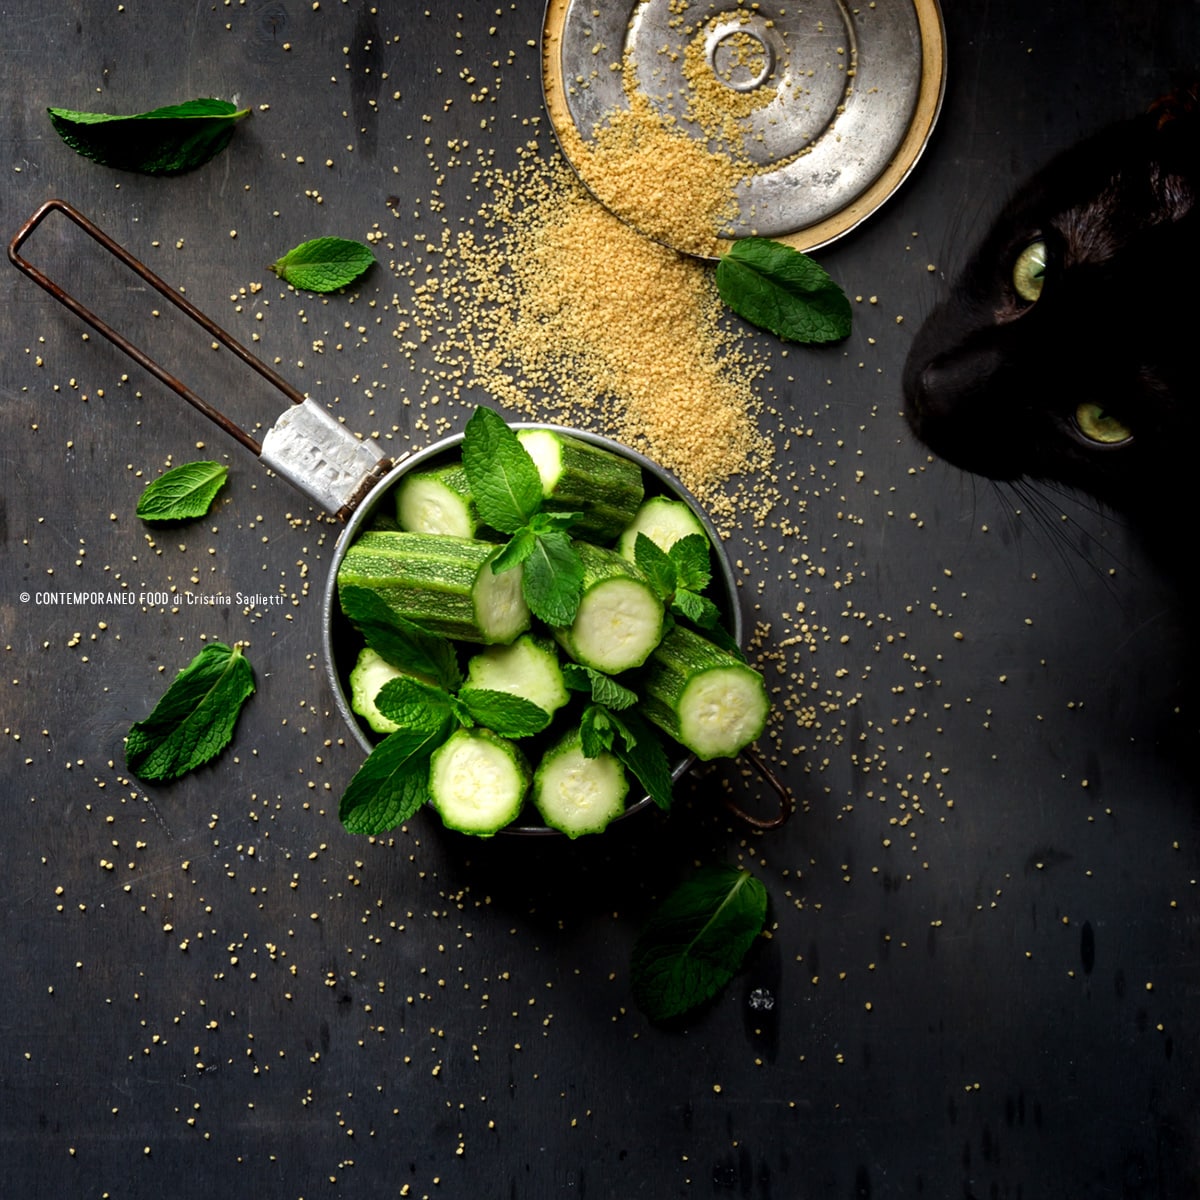 couscous-zucchine-saraguida-app-contemporaneo-food